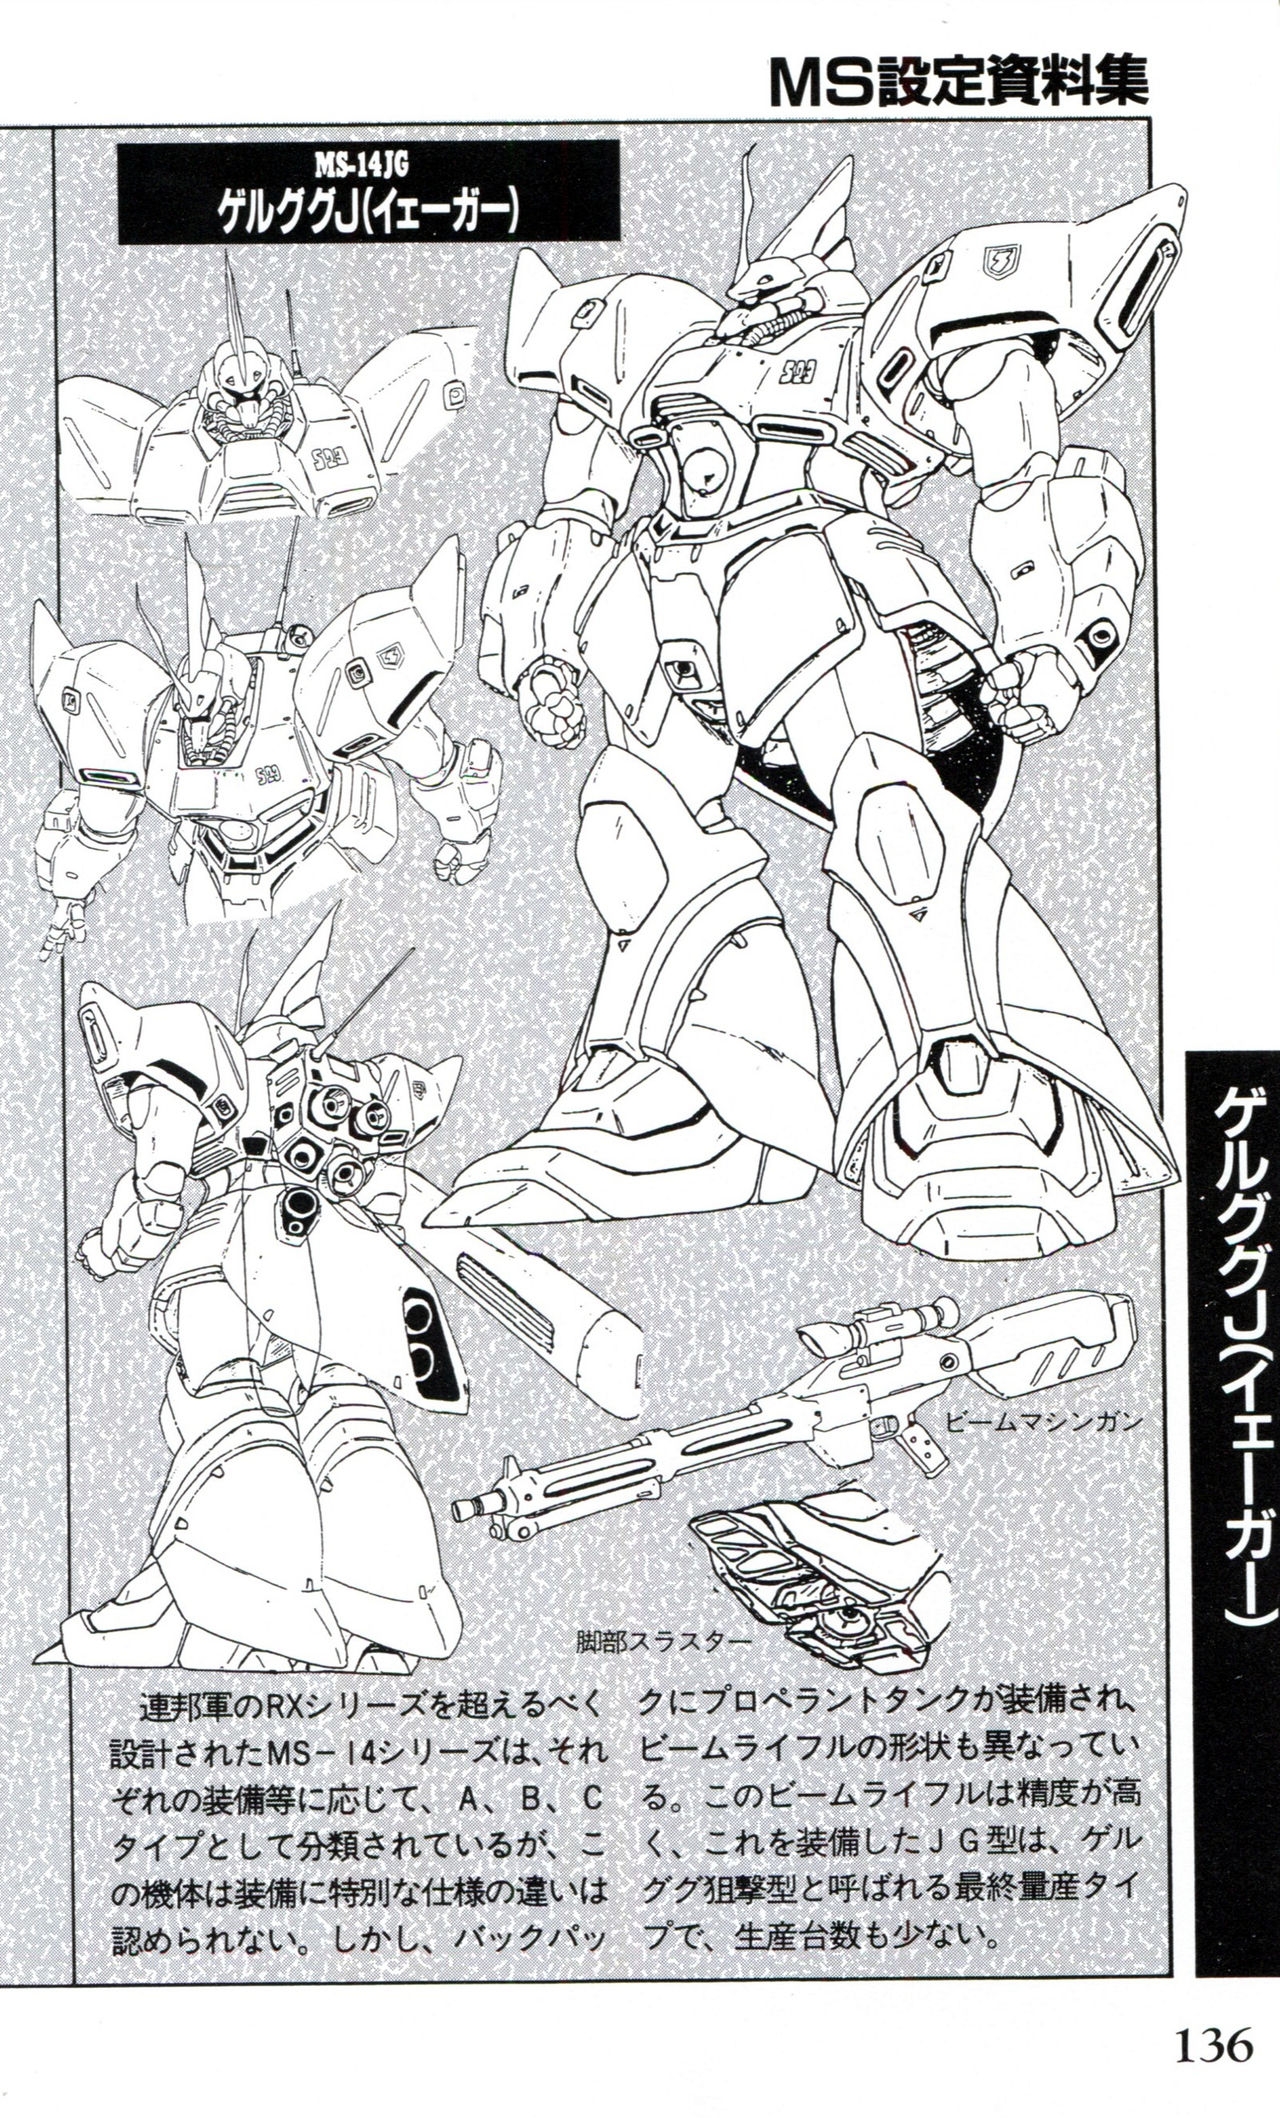 Mobile Suit Gundam U.C. Box MS Gundam Encyclopedia NO.01 - Mobile Suit Gundam 135